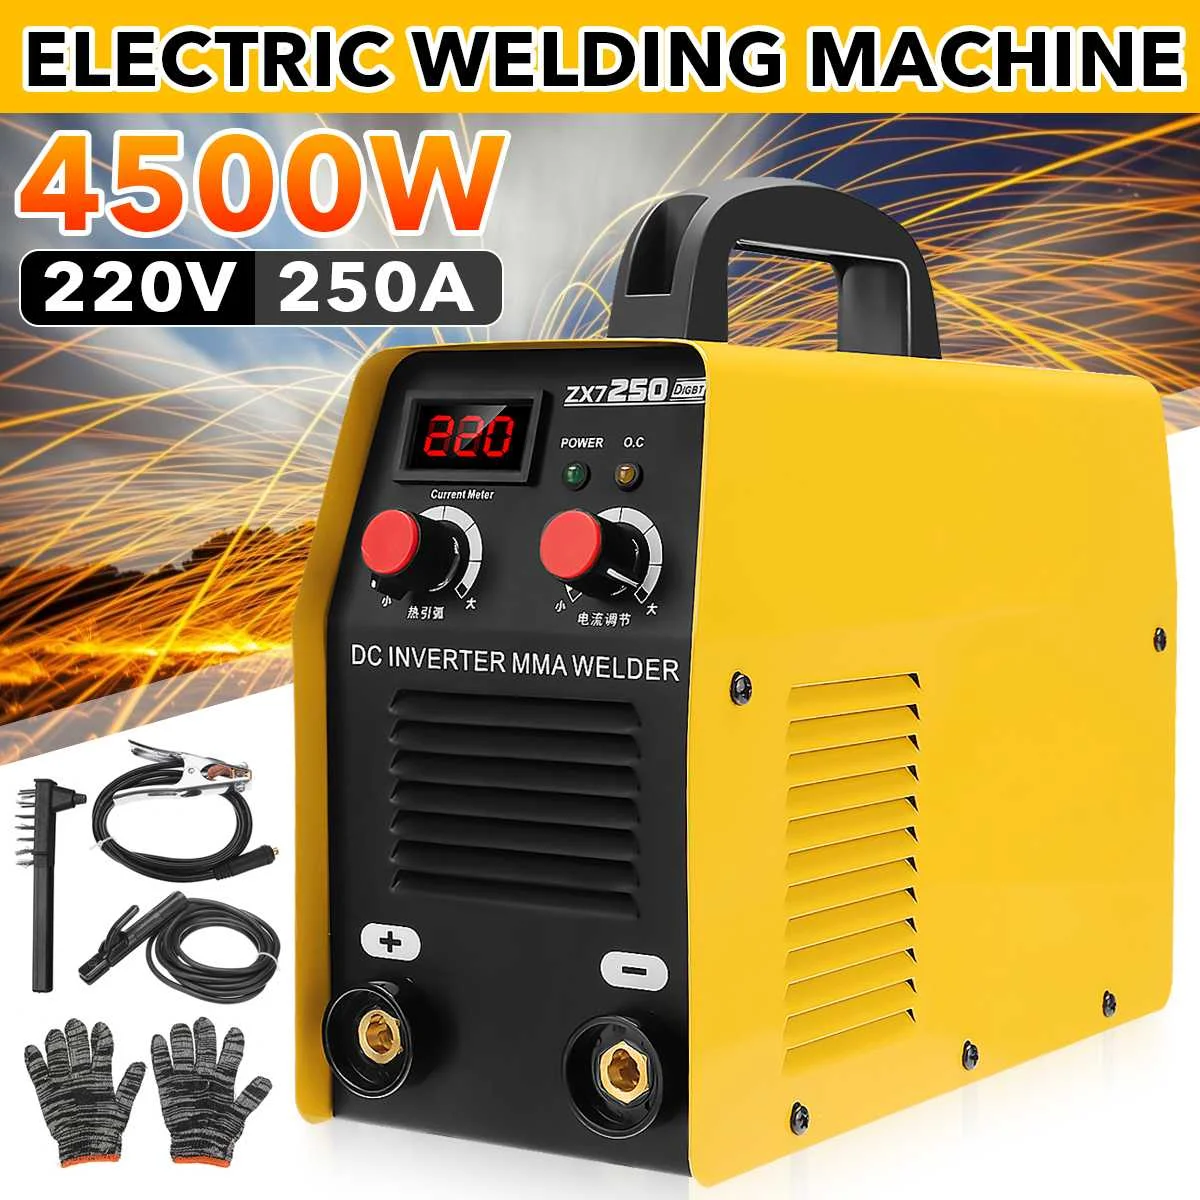 

ZX7-250 250A 4500W IGBT Inverter Arc Mini Electric Welding Machine 220V ARC MMA Stick Welder for DIY Welding Electric Working